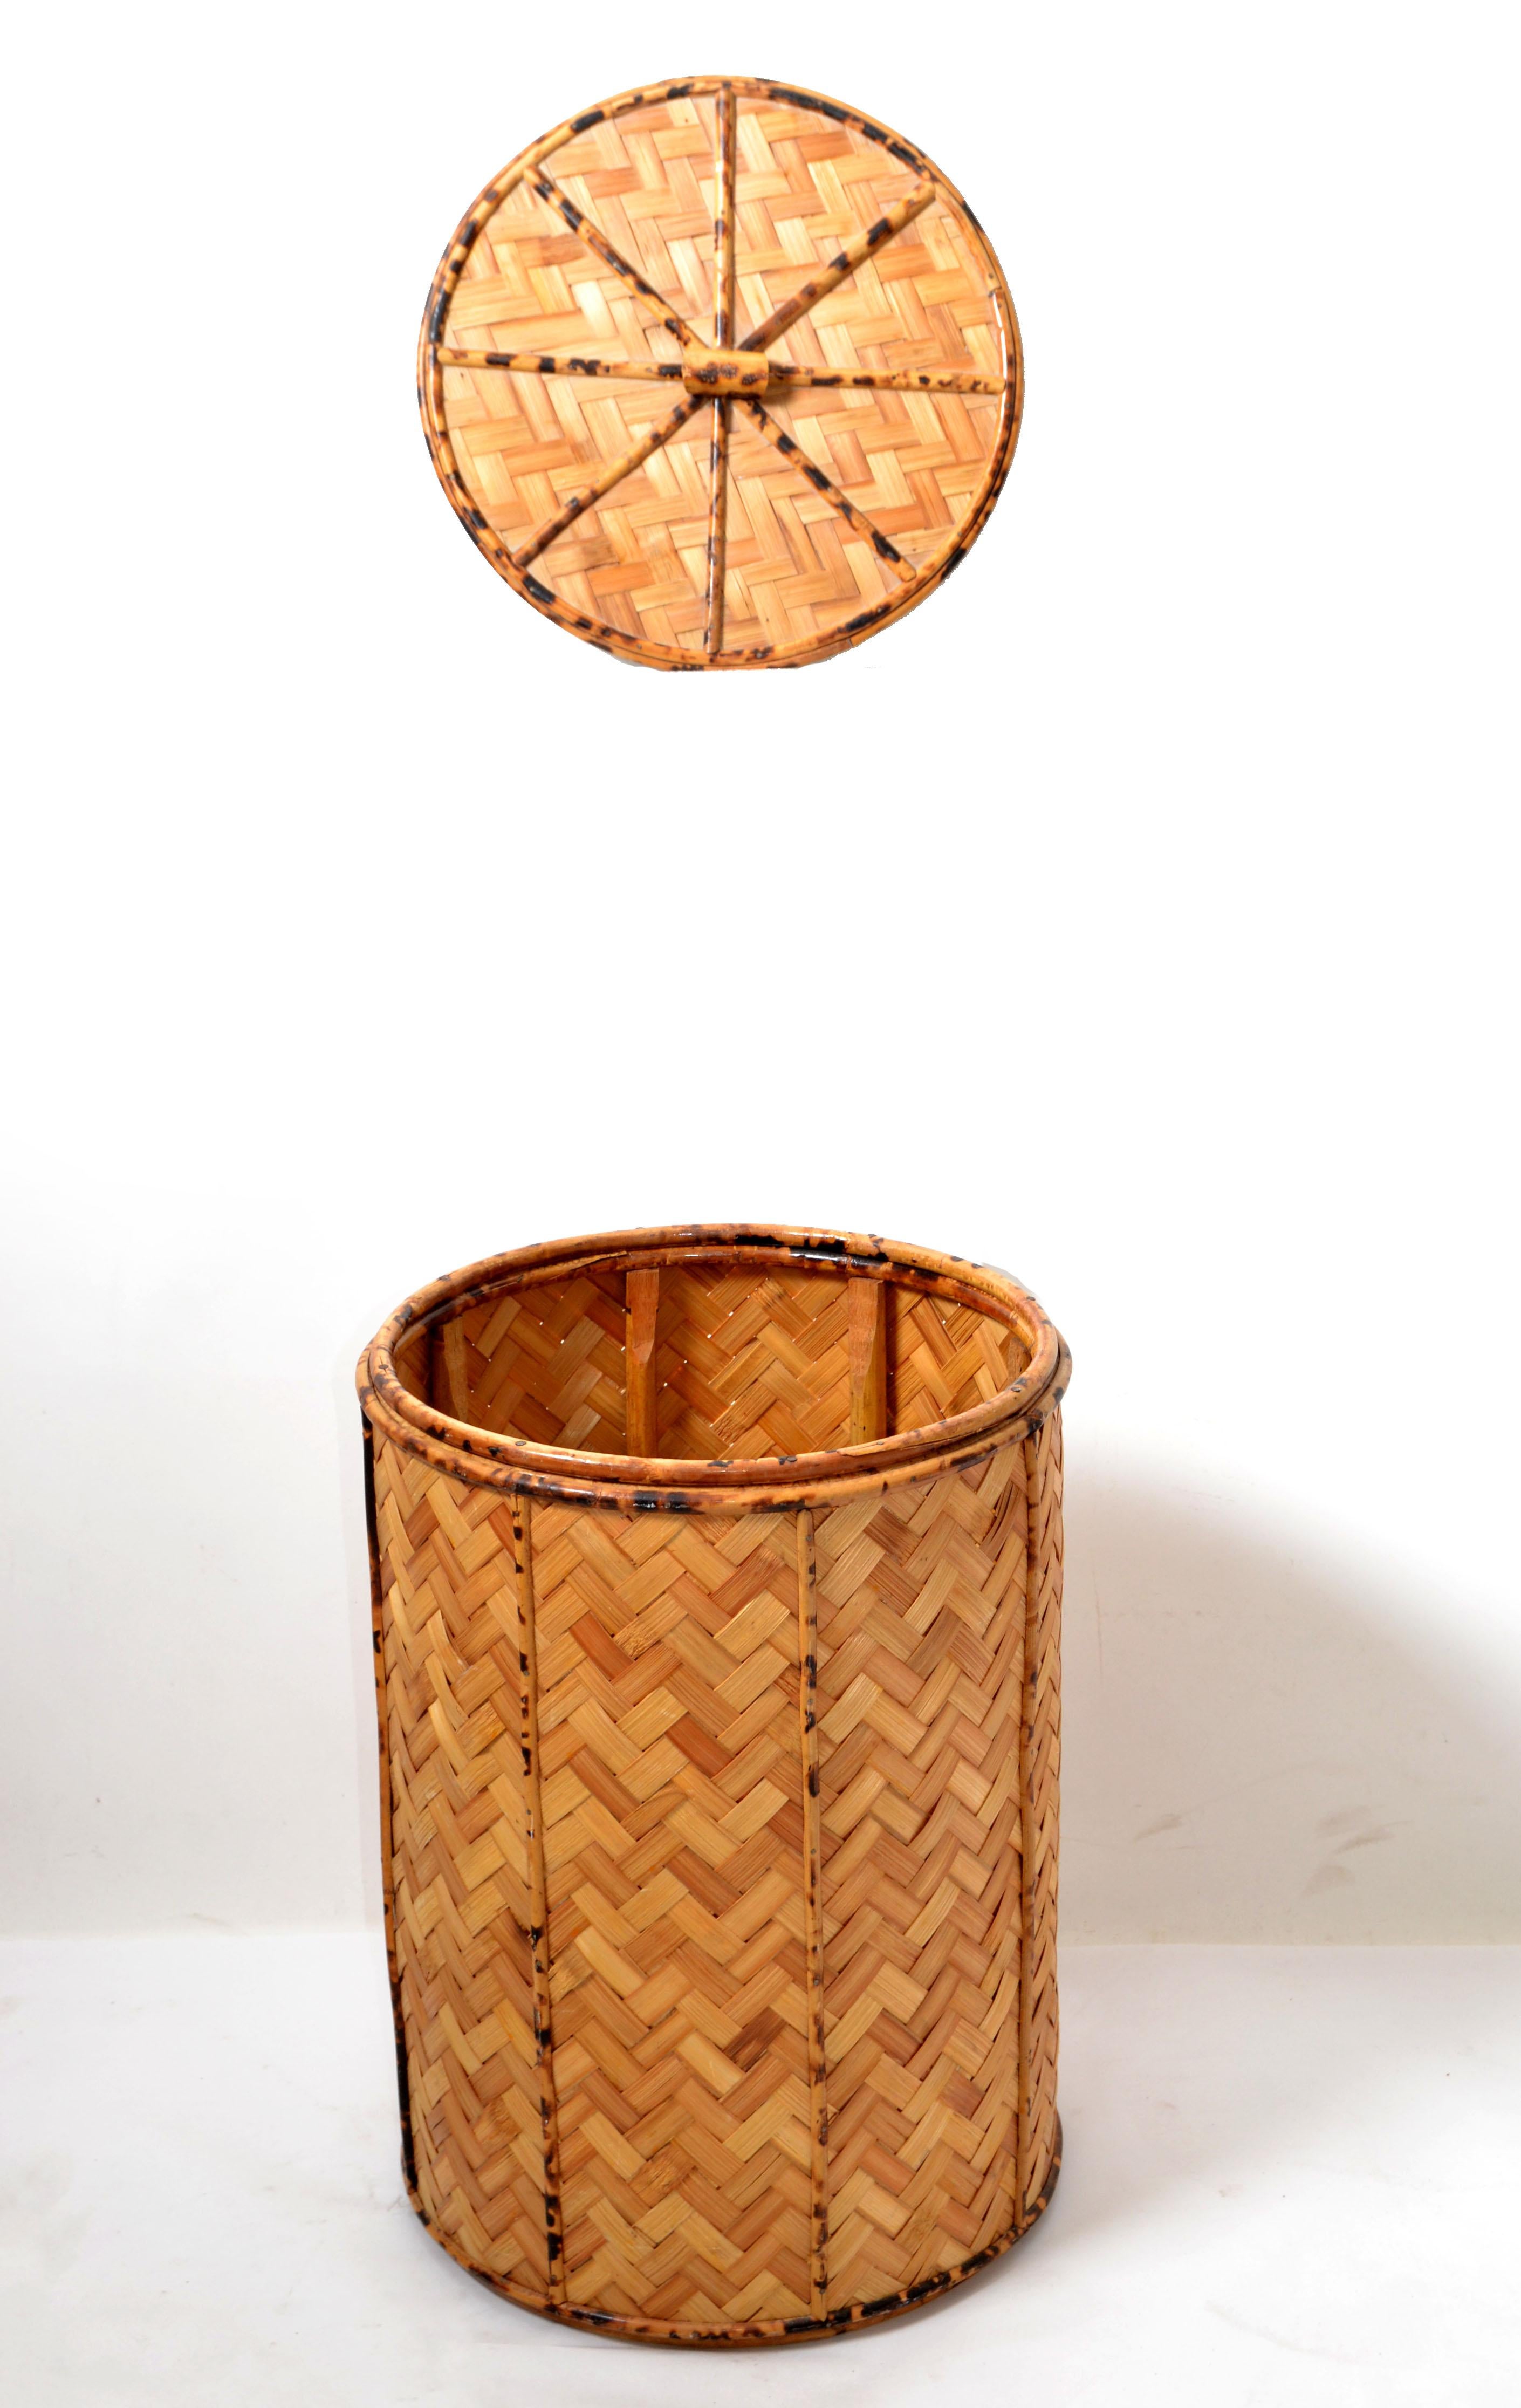 Chinese Export Vintage Lidded Basket Handmade Bamboo & Handwoven Rattan Hong Kong Asian Modern For Sale